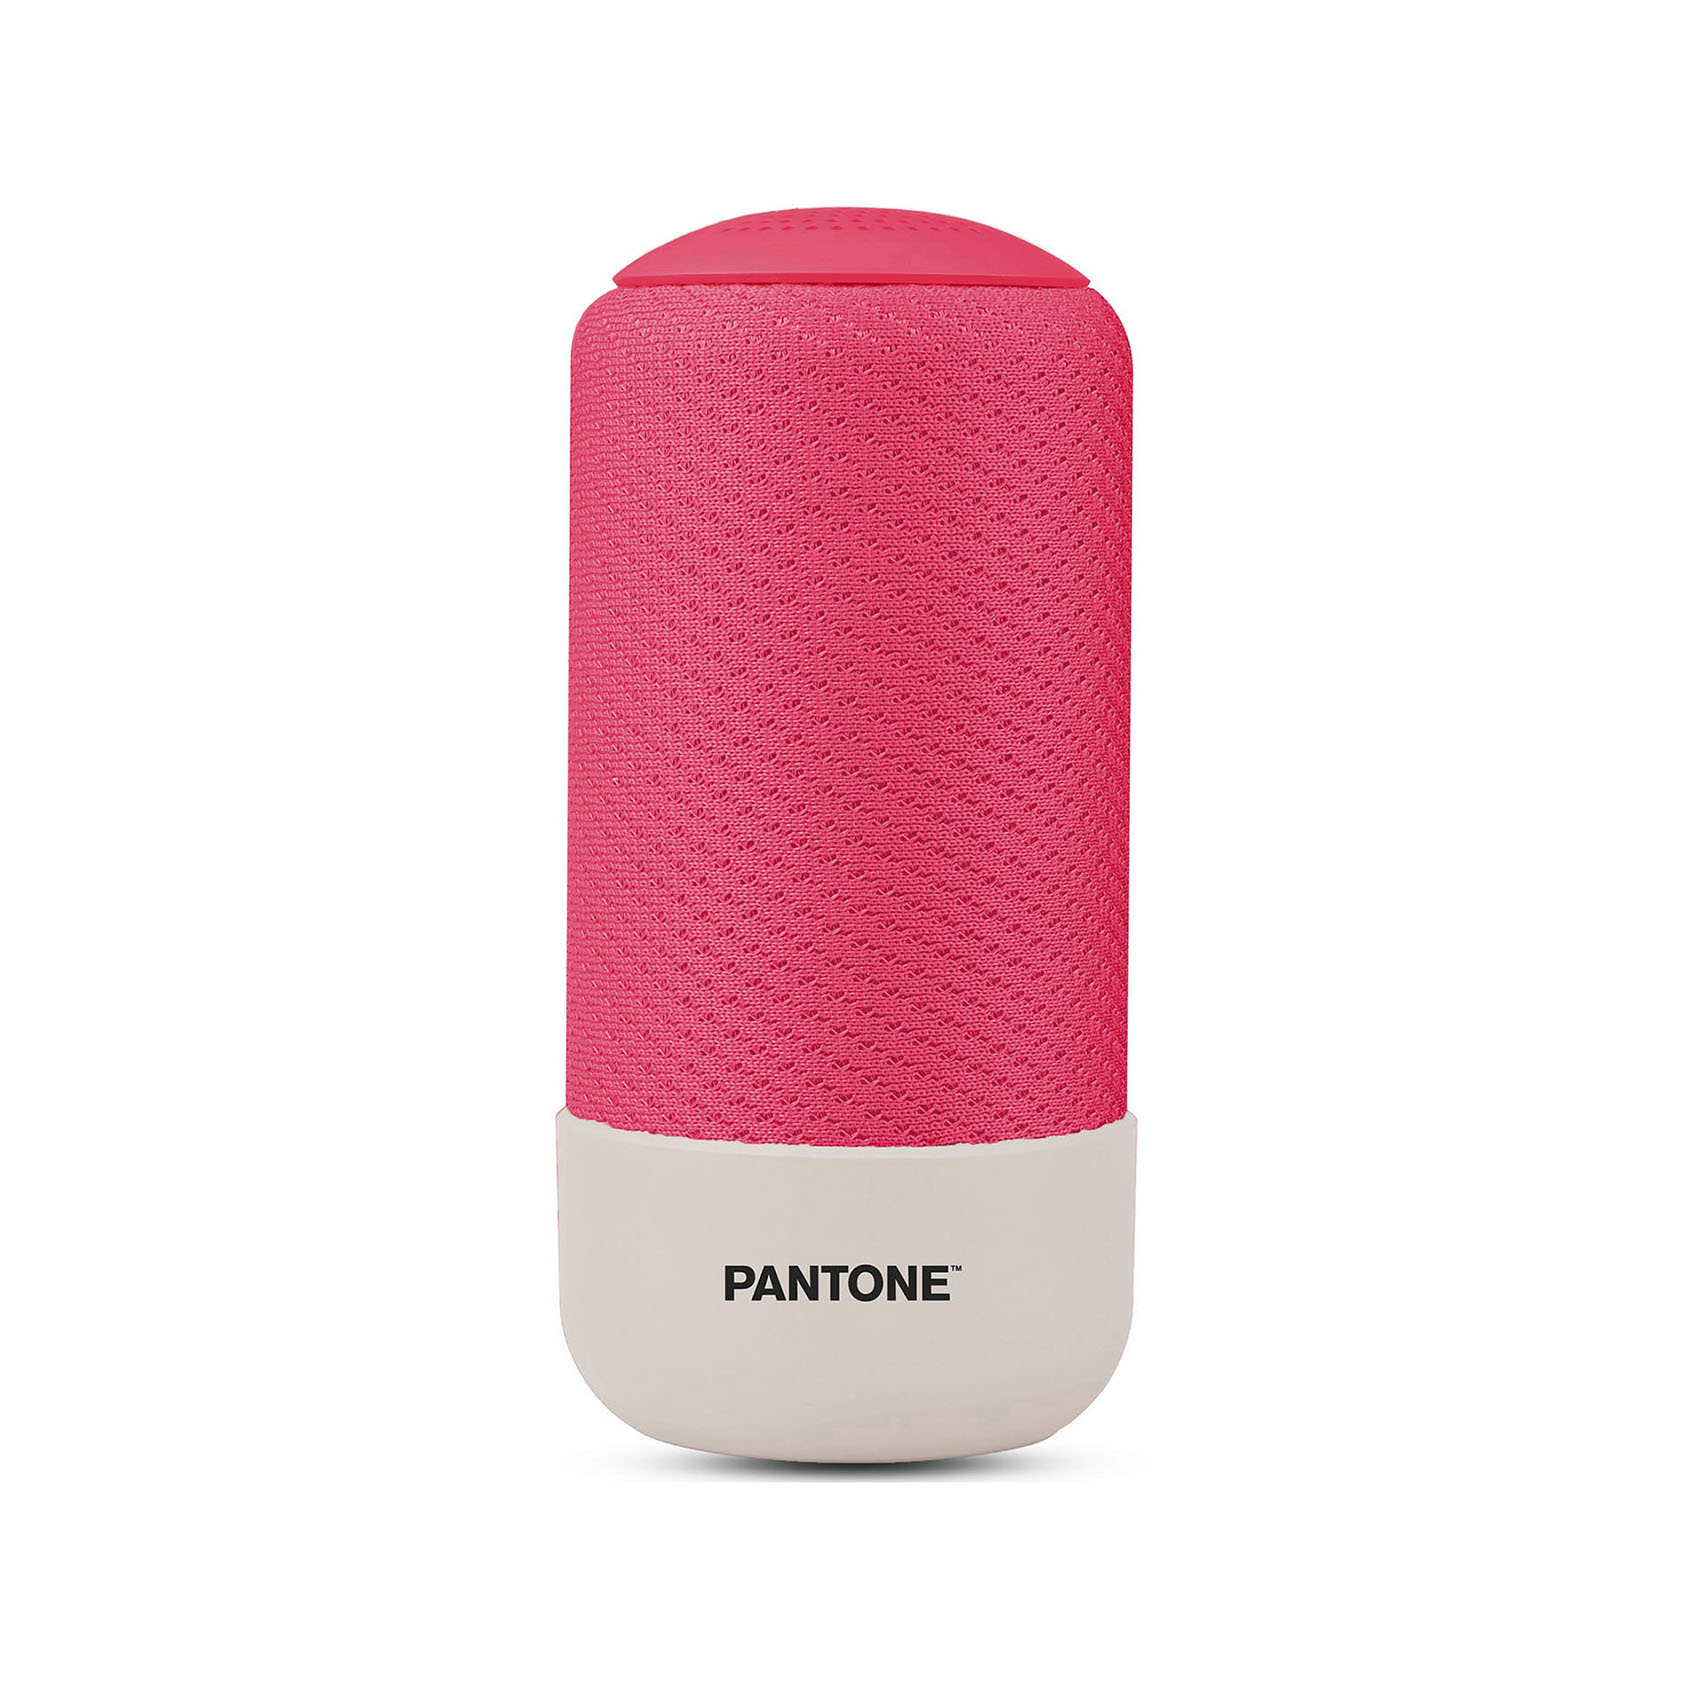 Altoparlante Bluetooth Linea Pantone, , large